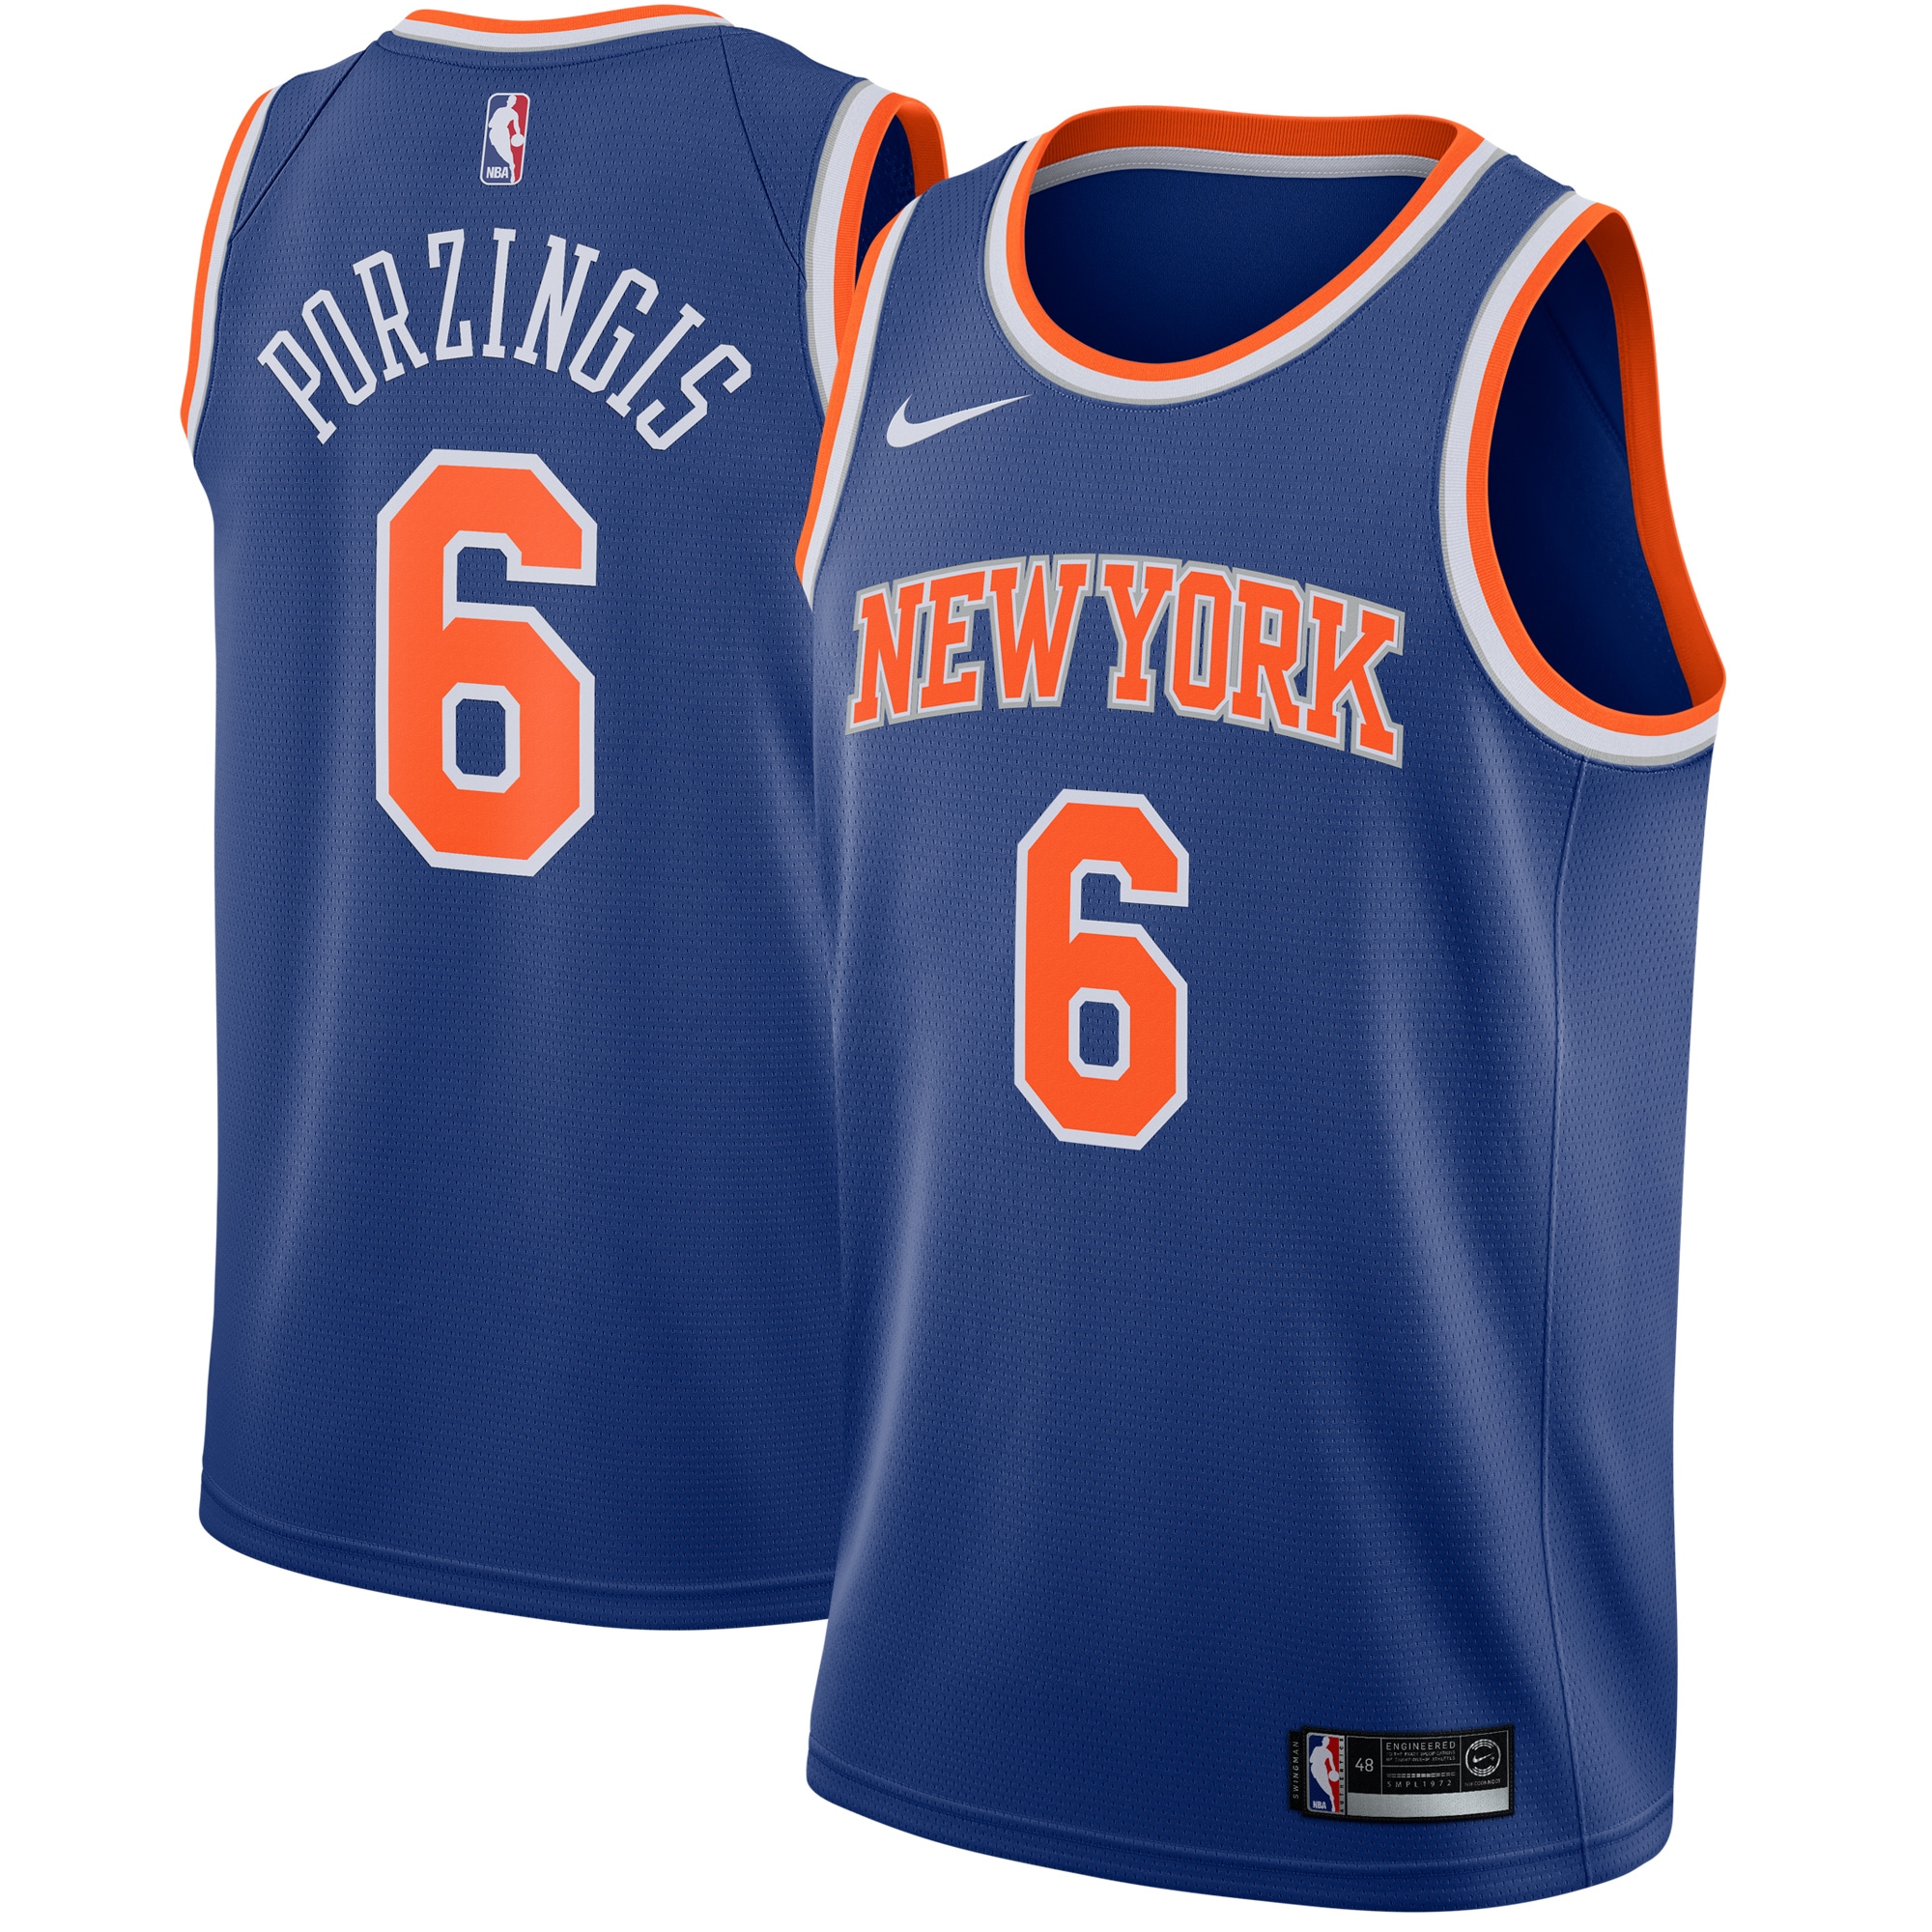 Kristaps Porzingis New York Knicks Nike Swingman Jersey Blue - Icon Edition - image 1 of 3